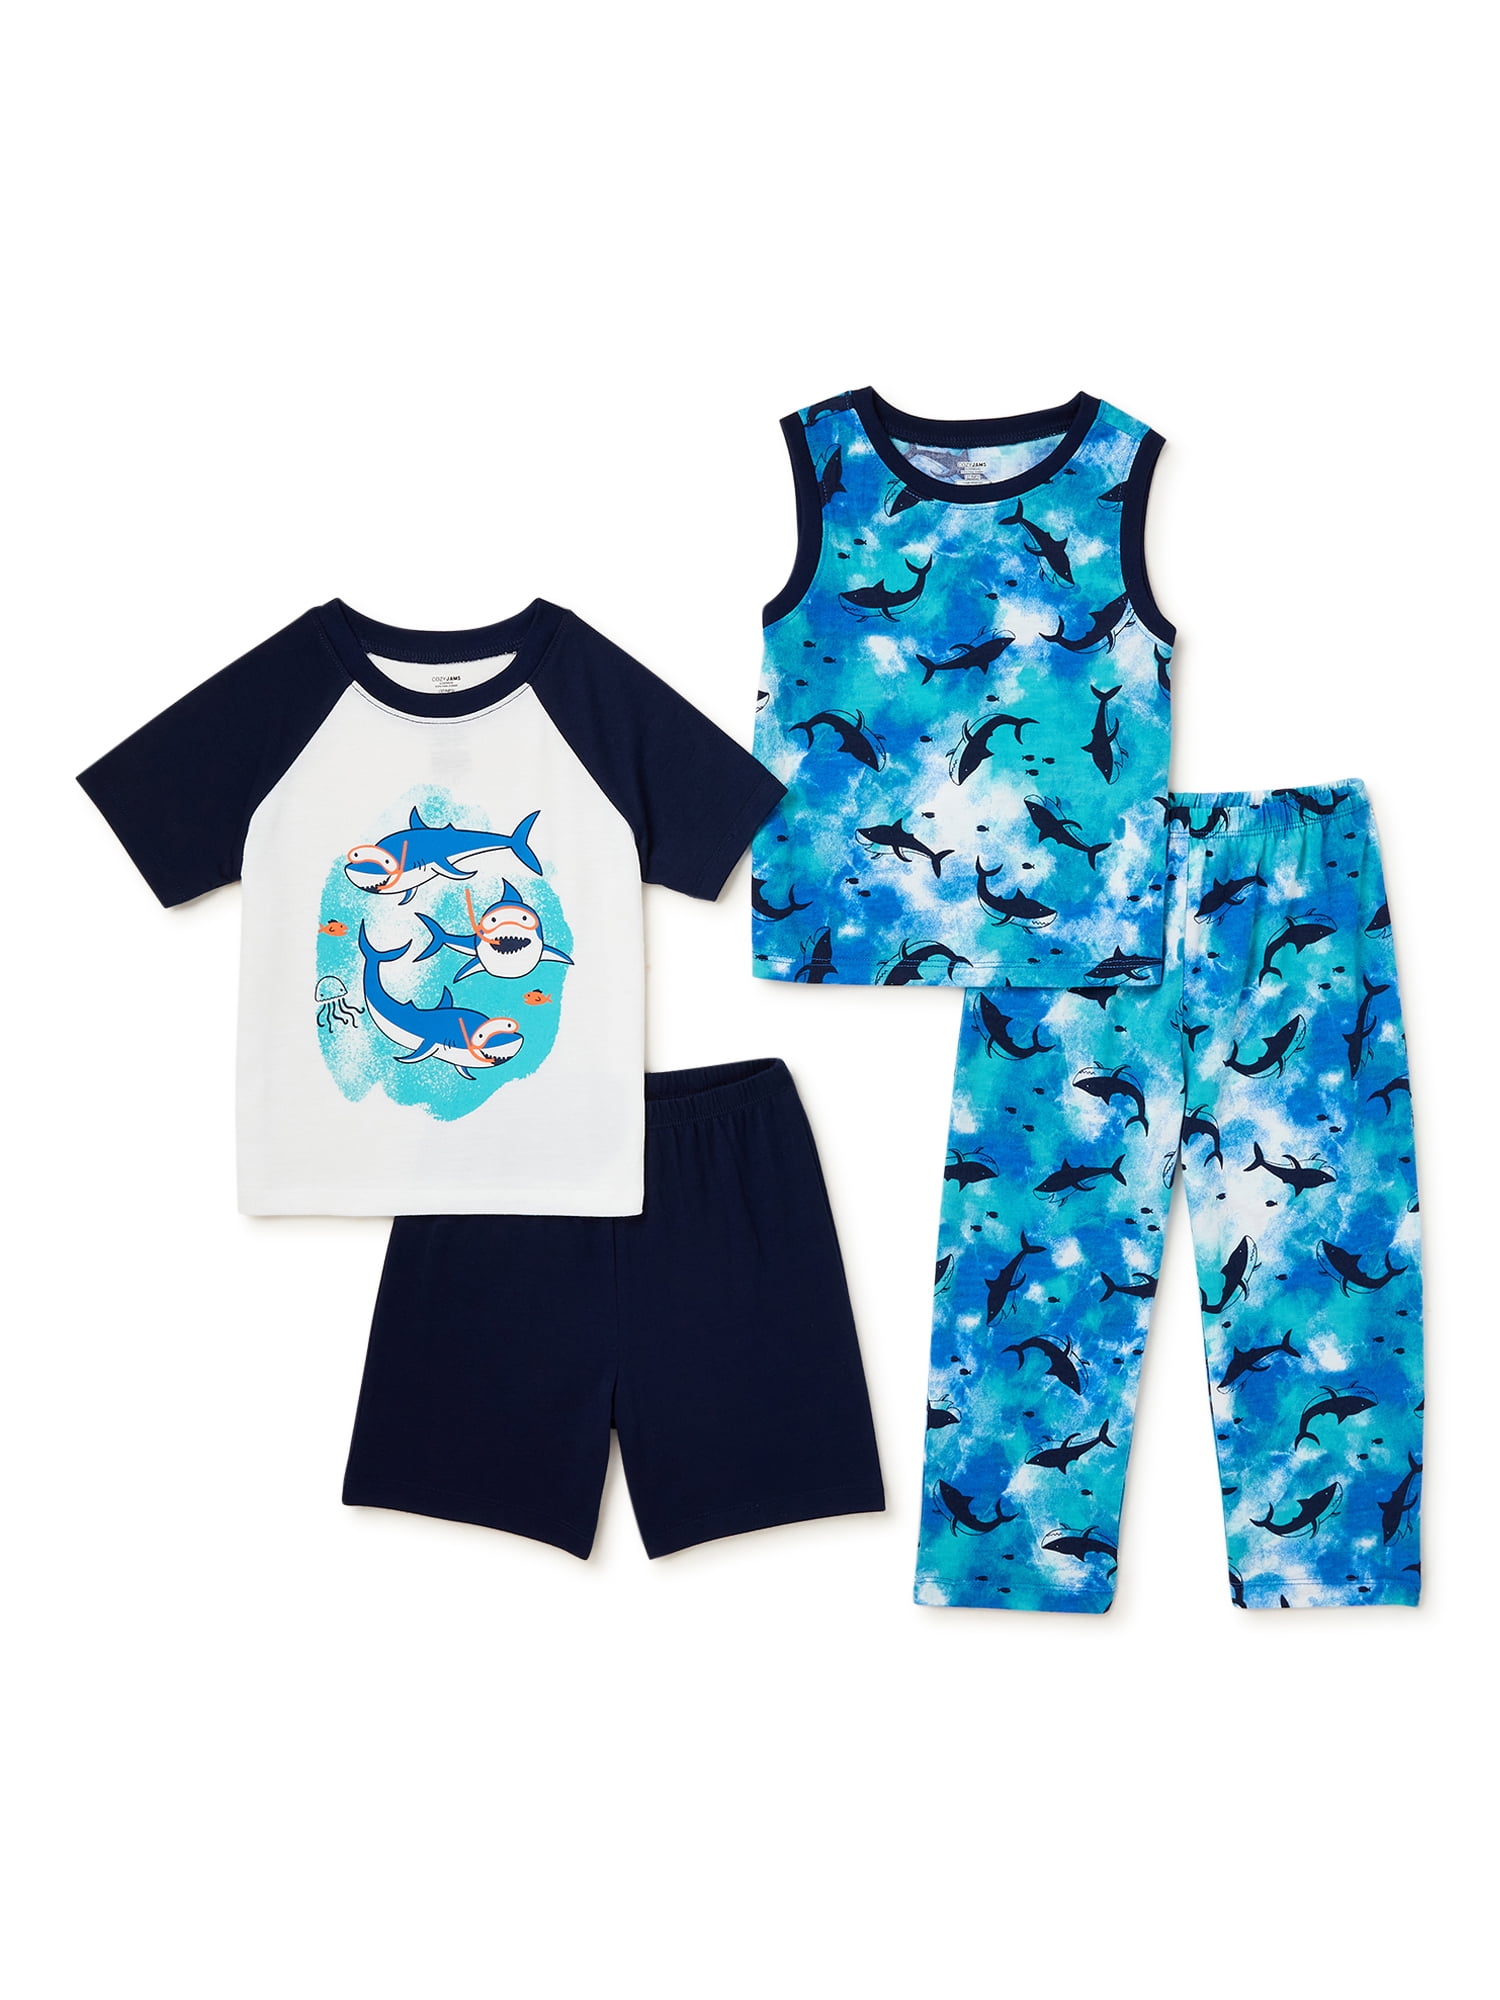 Cozy Jams Baby & Toddler Boys T-Shirt, Tank Top, Shorts and Pants, 4-Piece Sleep Set, Sizes 12M-5T